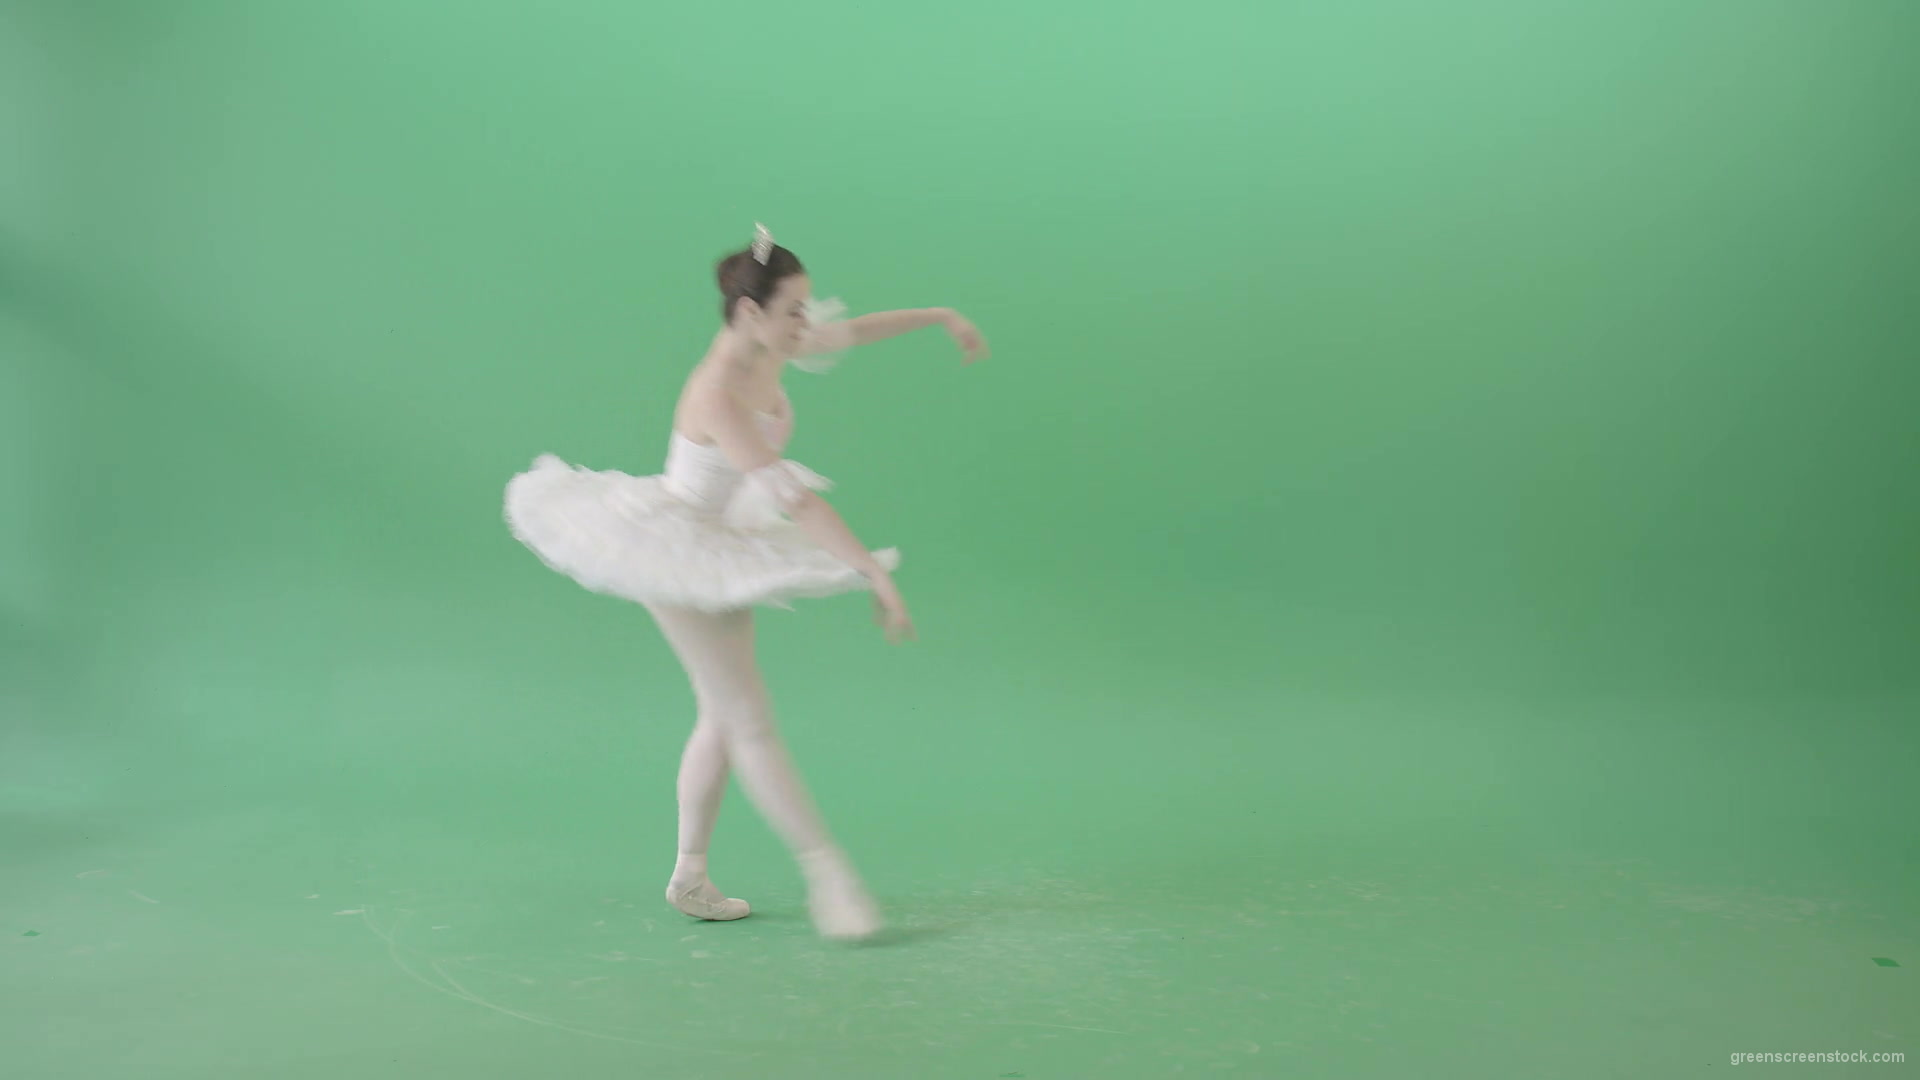 Flexibility-ballet-dancing-performance-girl-dancing-Classical-adagio-opera-on-green-screen-4K-Video-footage-1920_005 Green Screen Stock